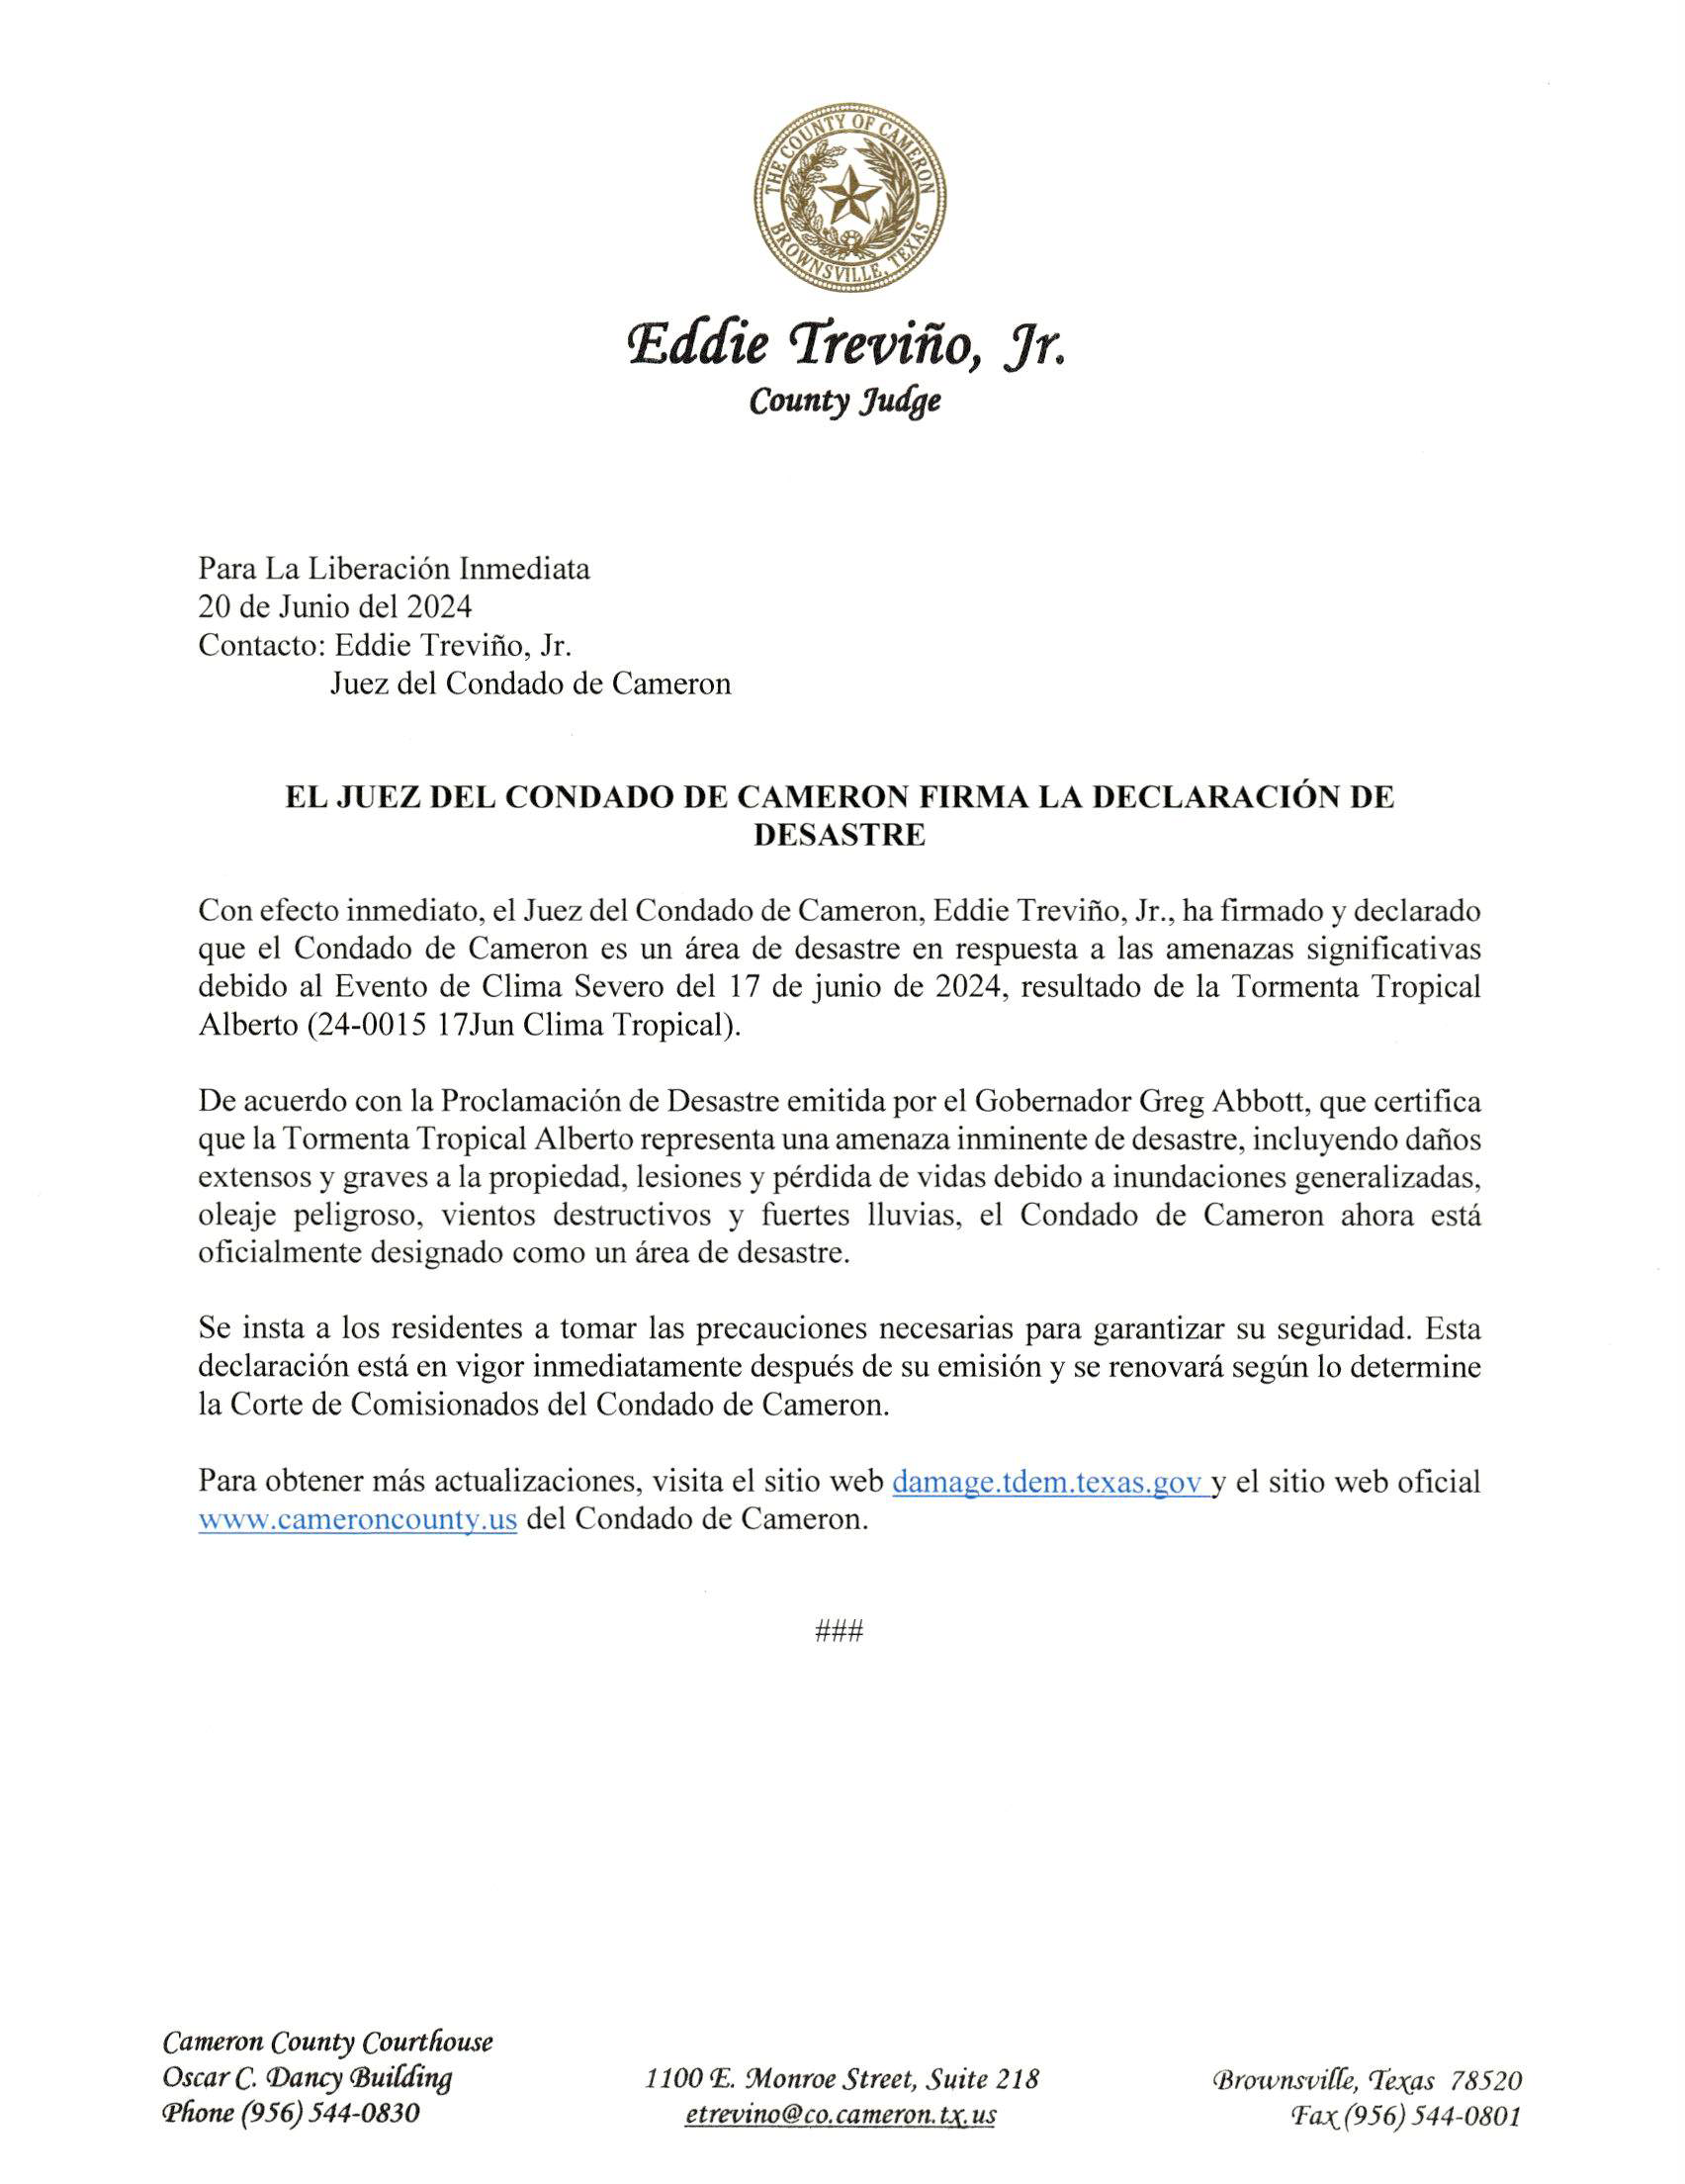 2024.06.20 Press Release Spanish Declaration Of Disaster Tropical Storm Alberto